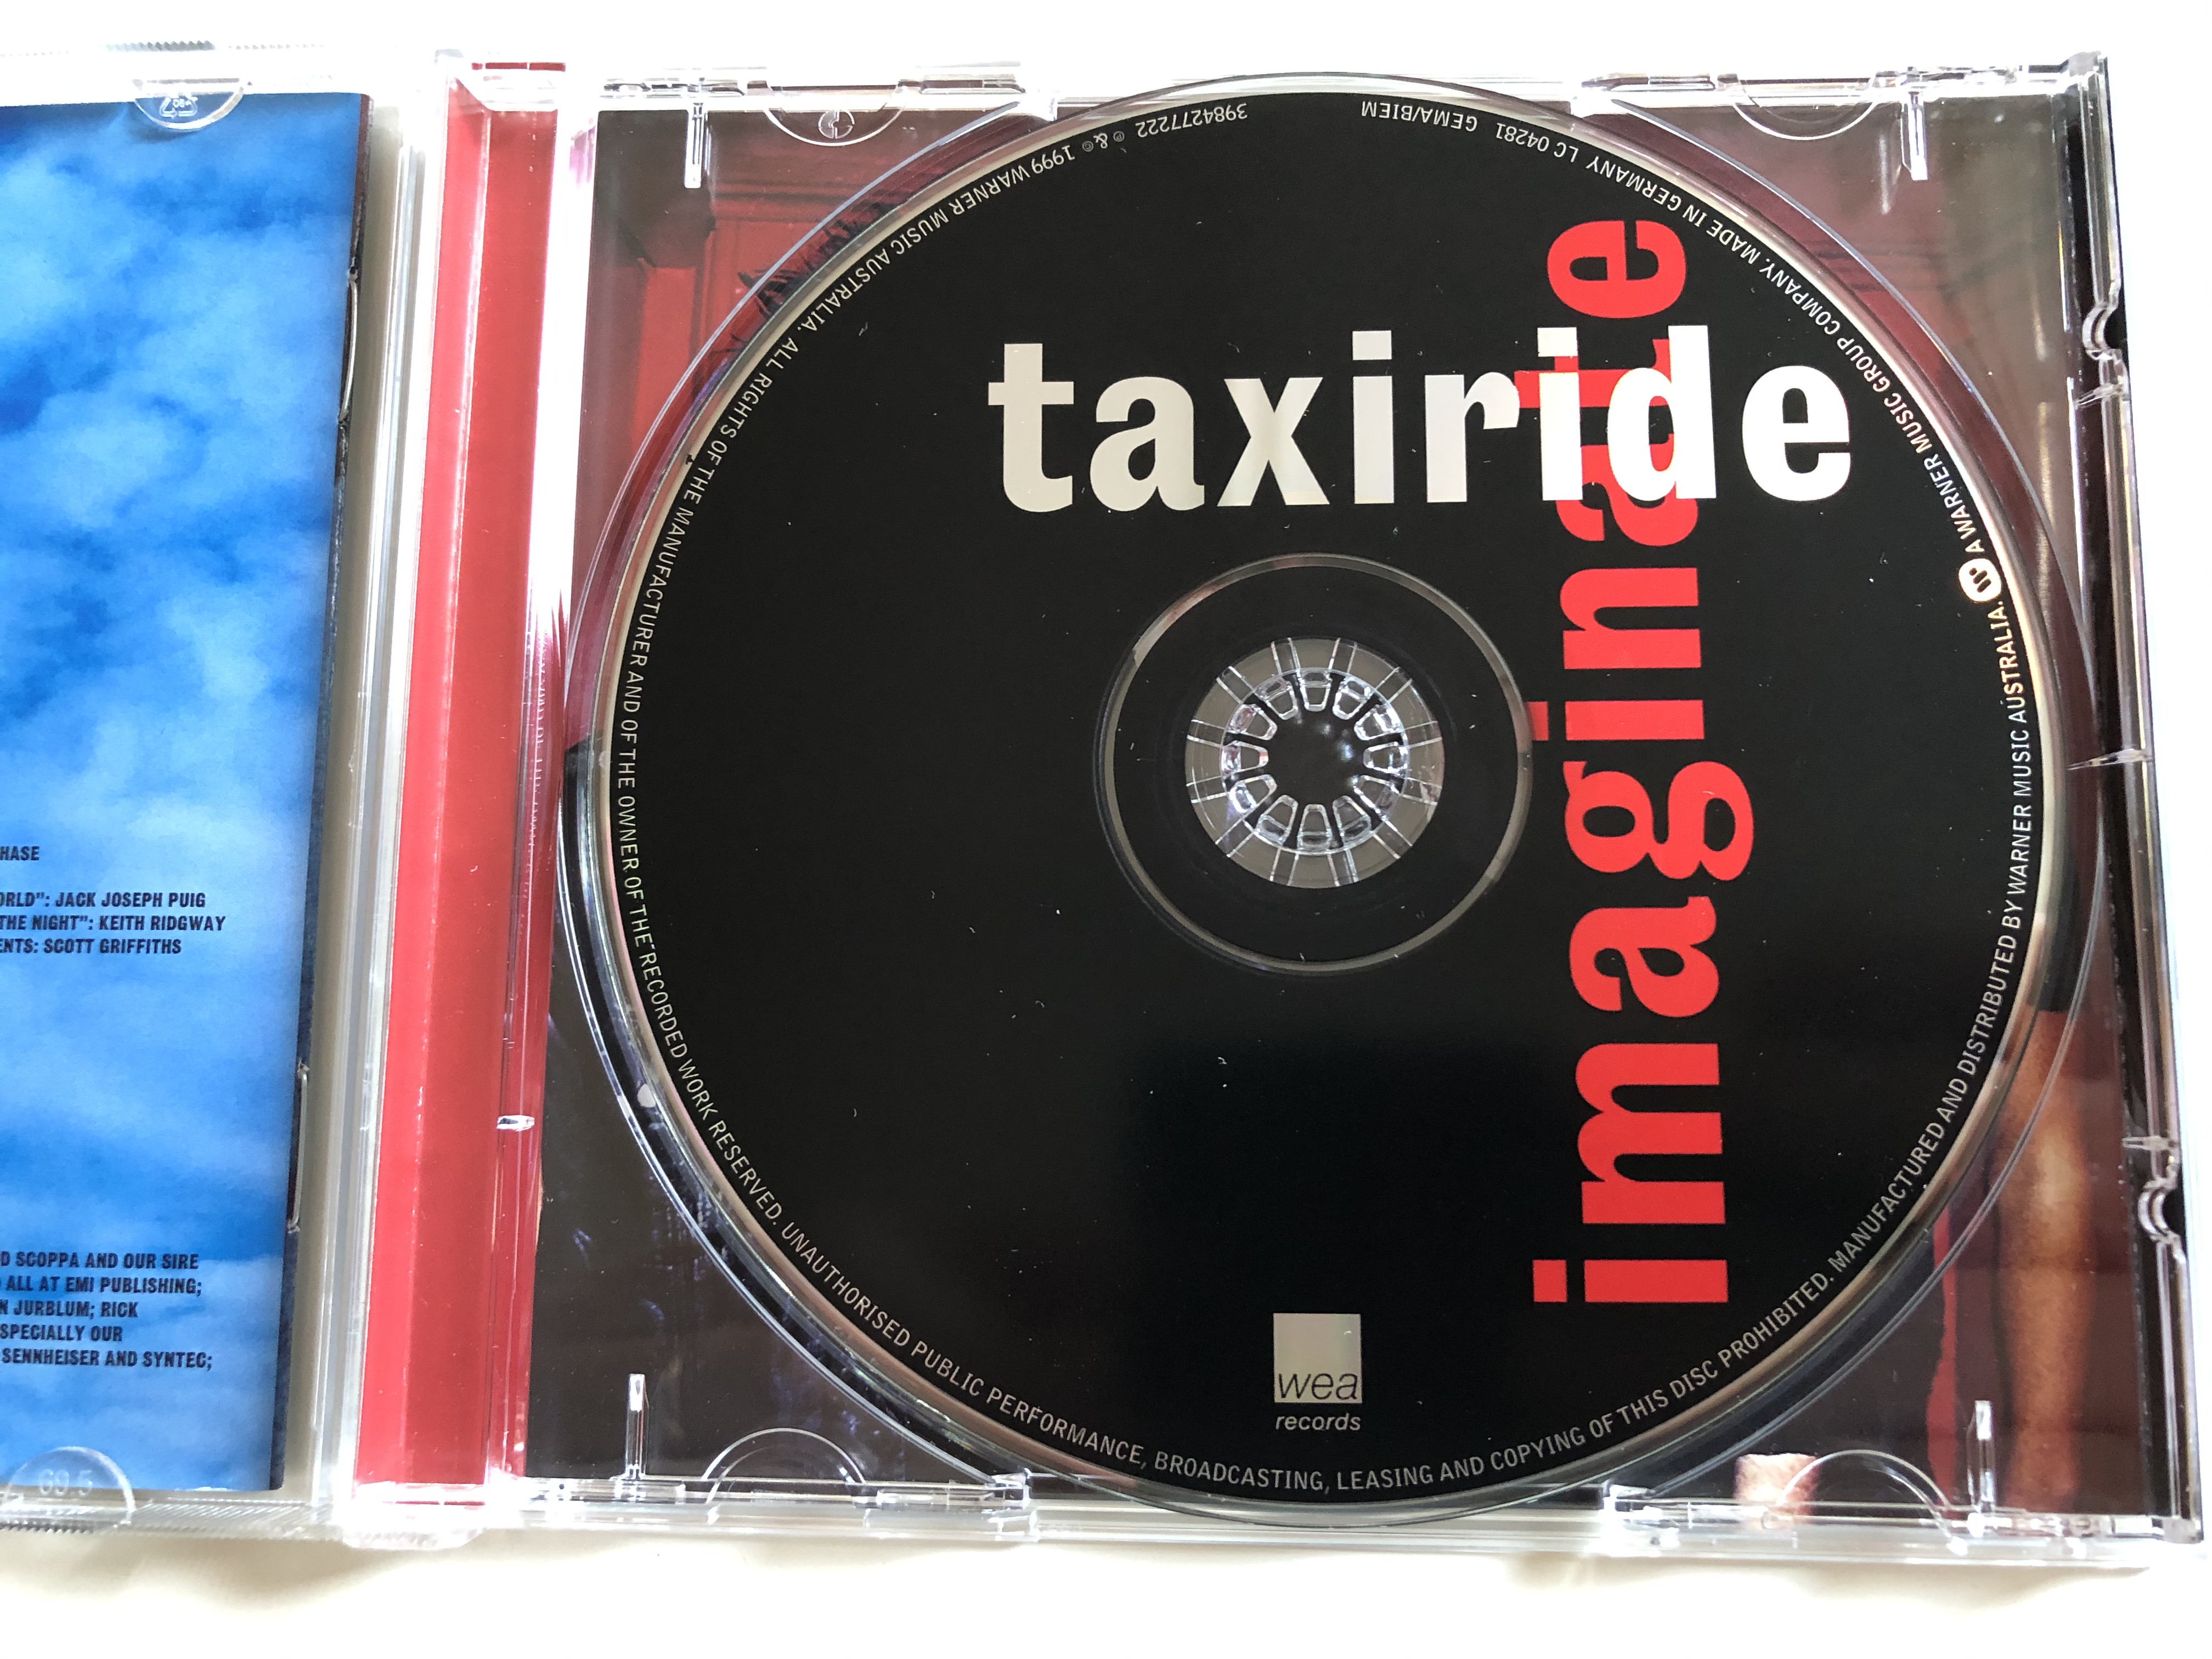 taxiride-imaginate-wea-records-audio-cd-1999-3984-27722-2-4-.jpg